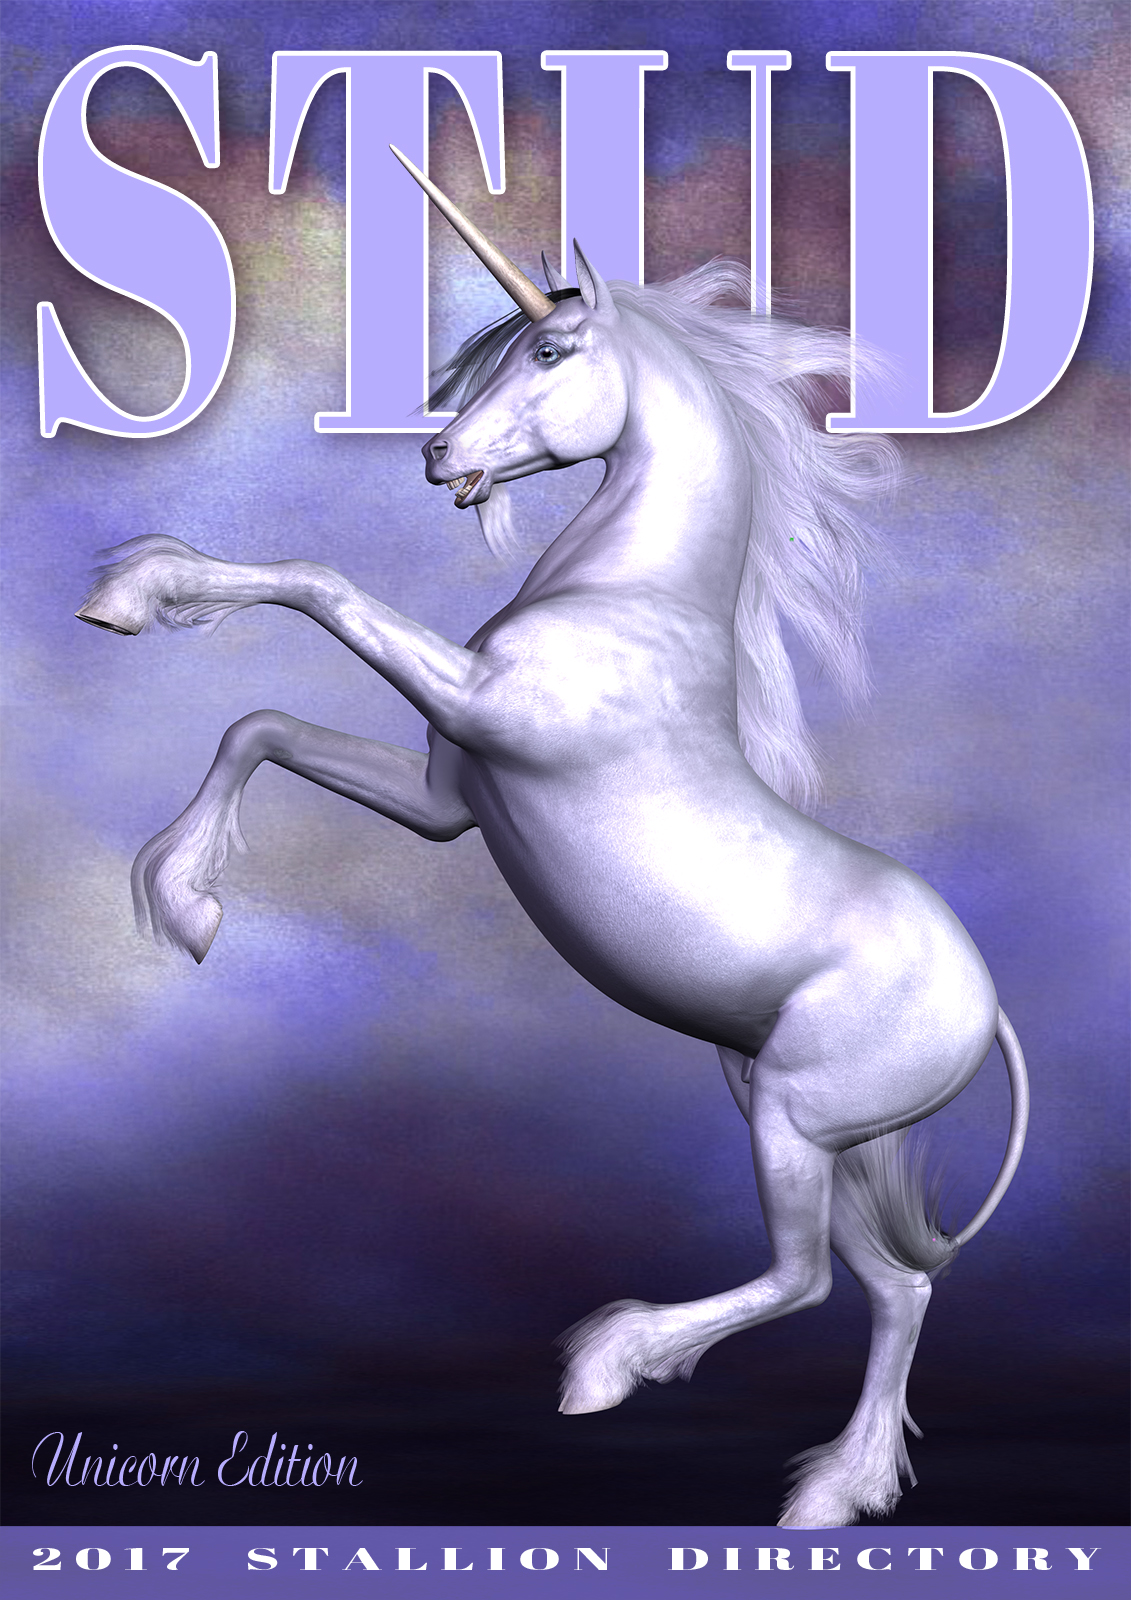 Magazine Cover - Stallion Directory - Unicorn Edition